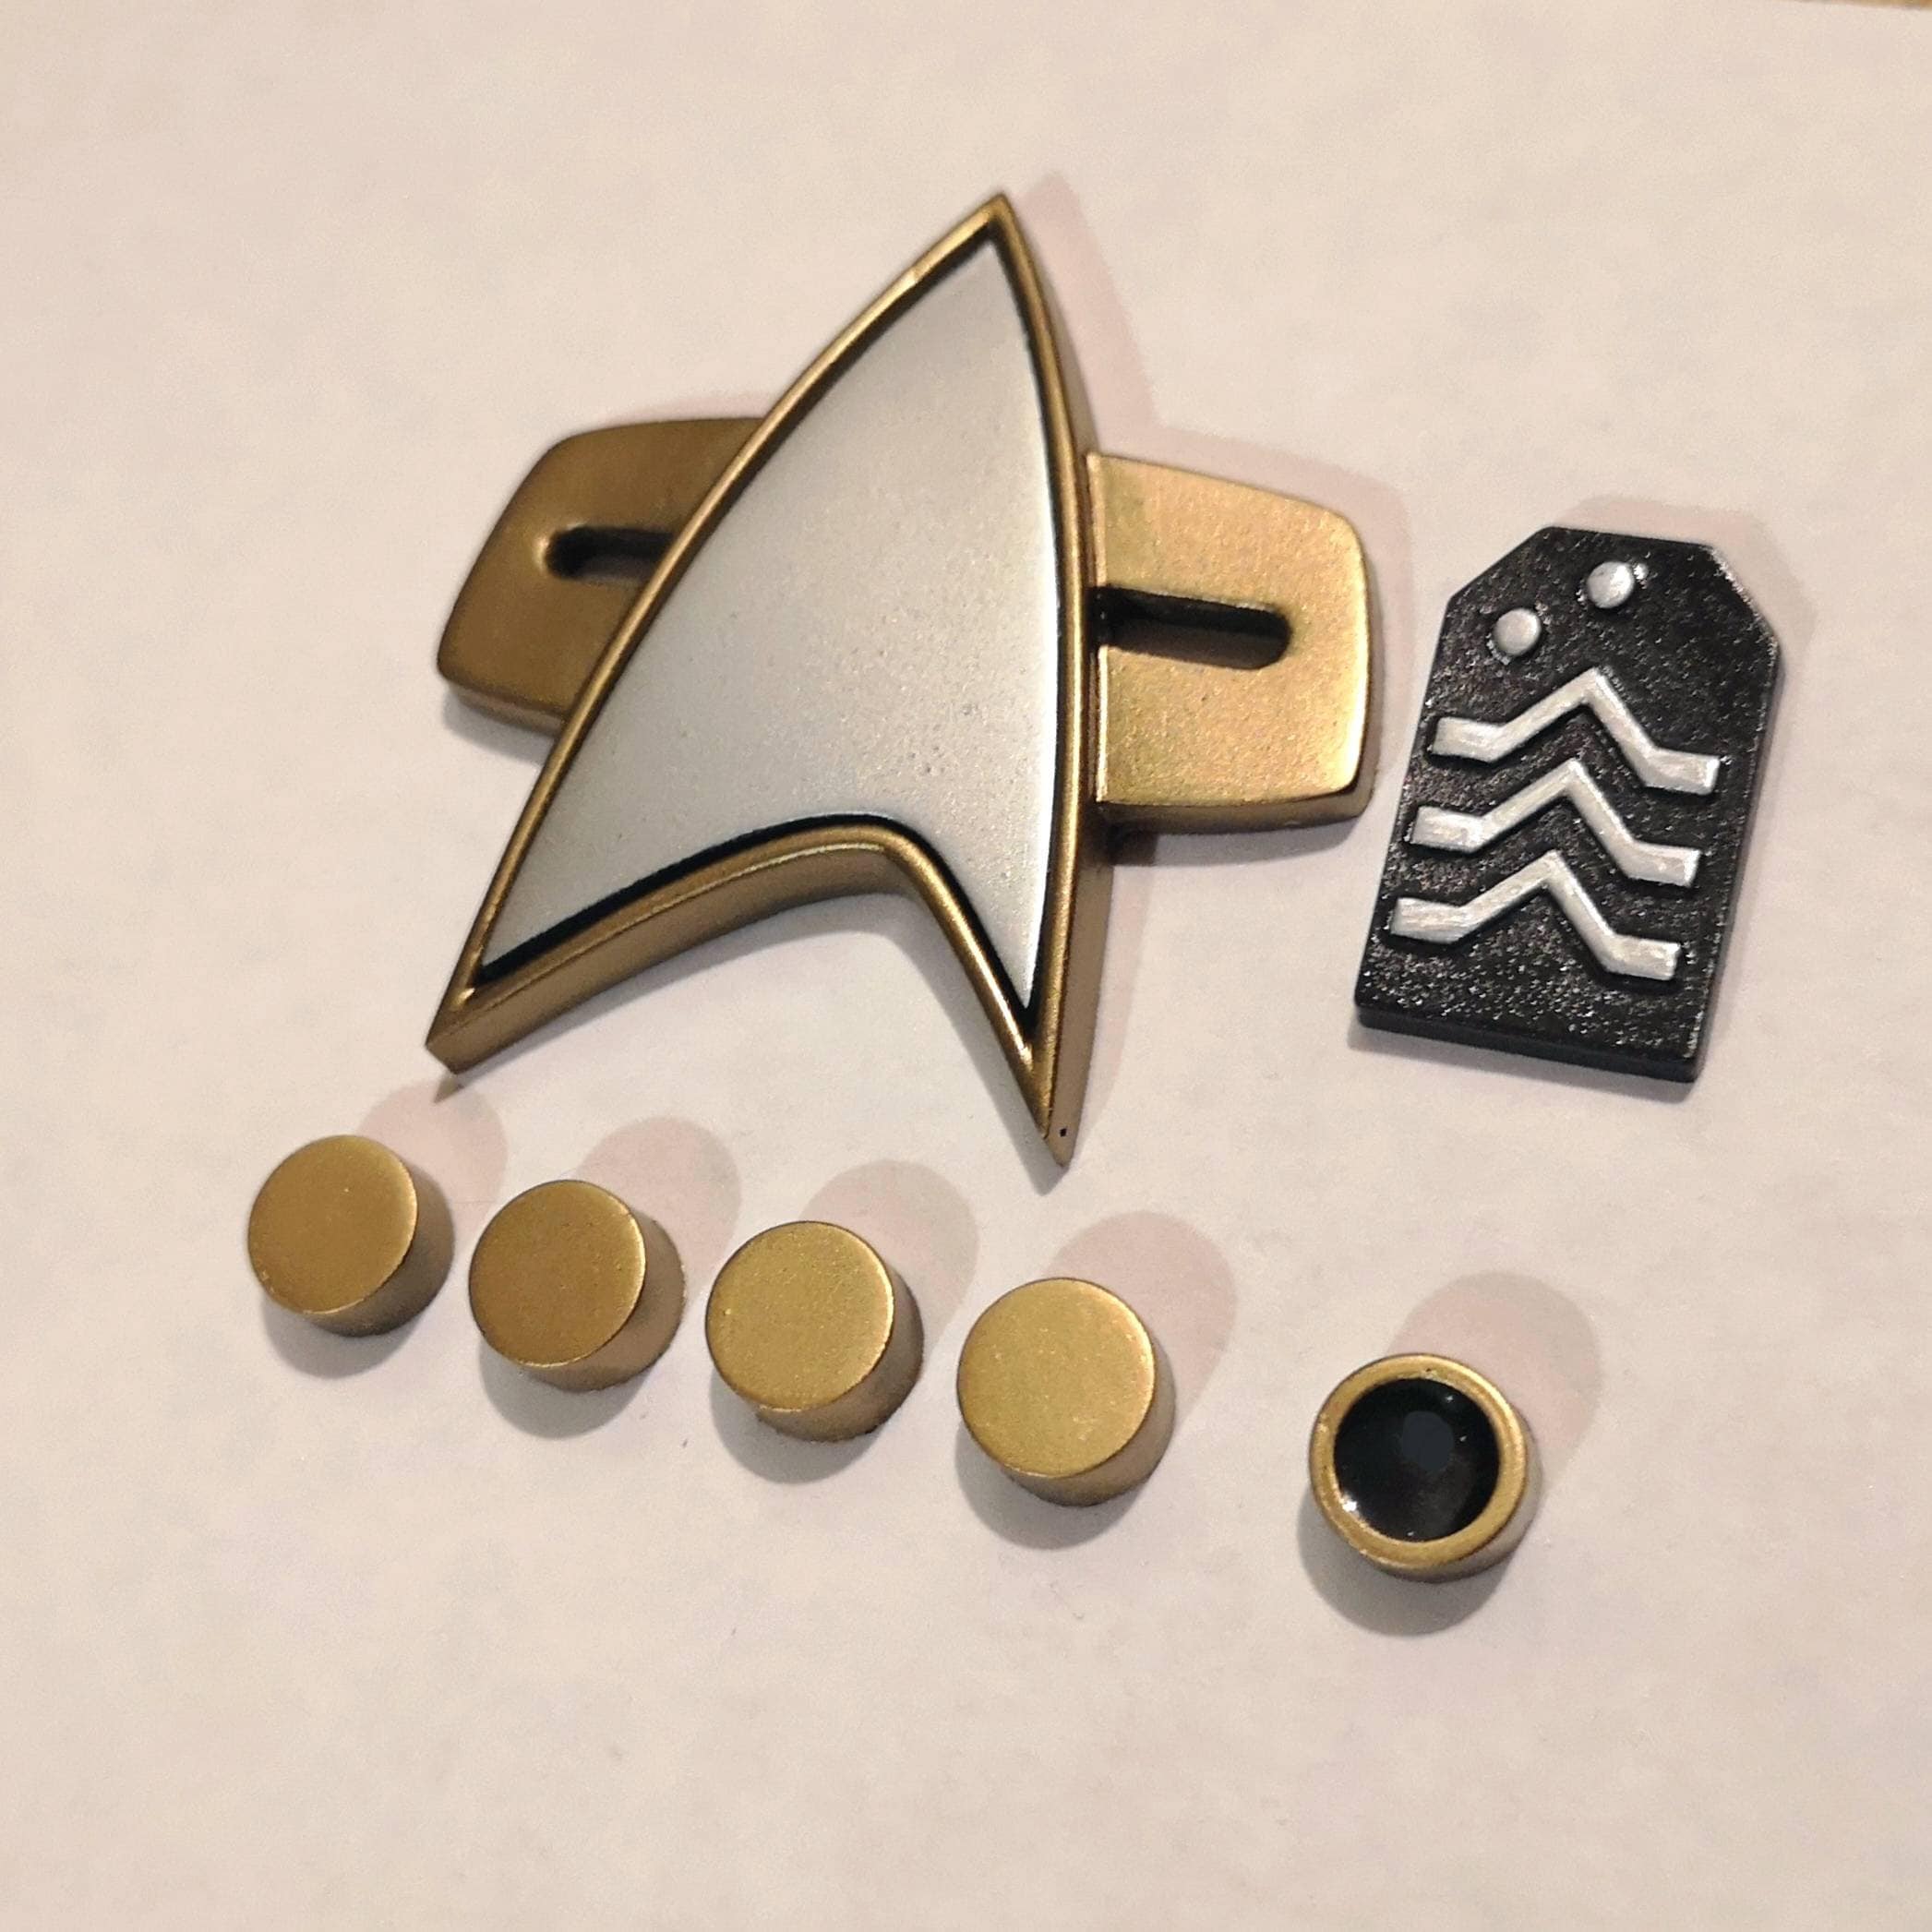 Star Trek Voyager Communication Badge Replica - 3